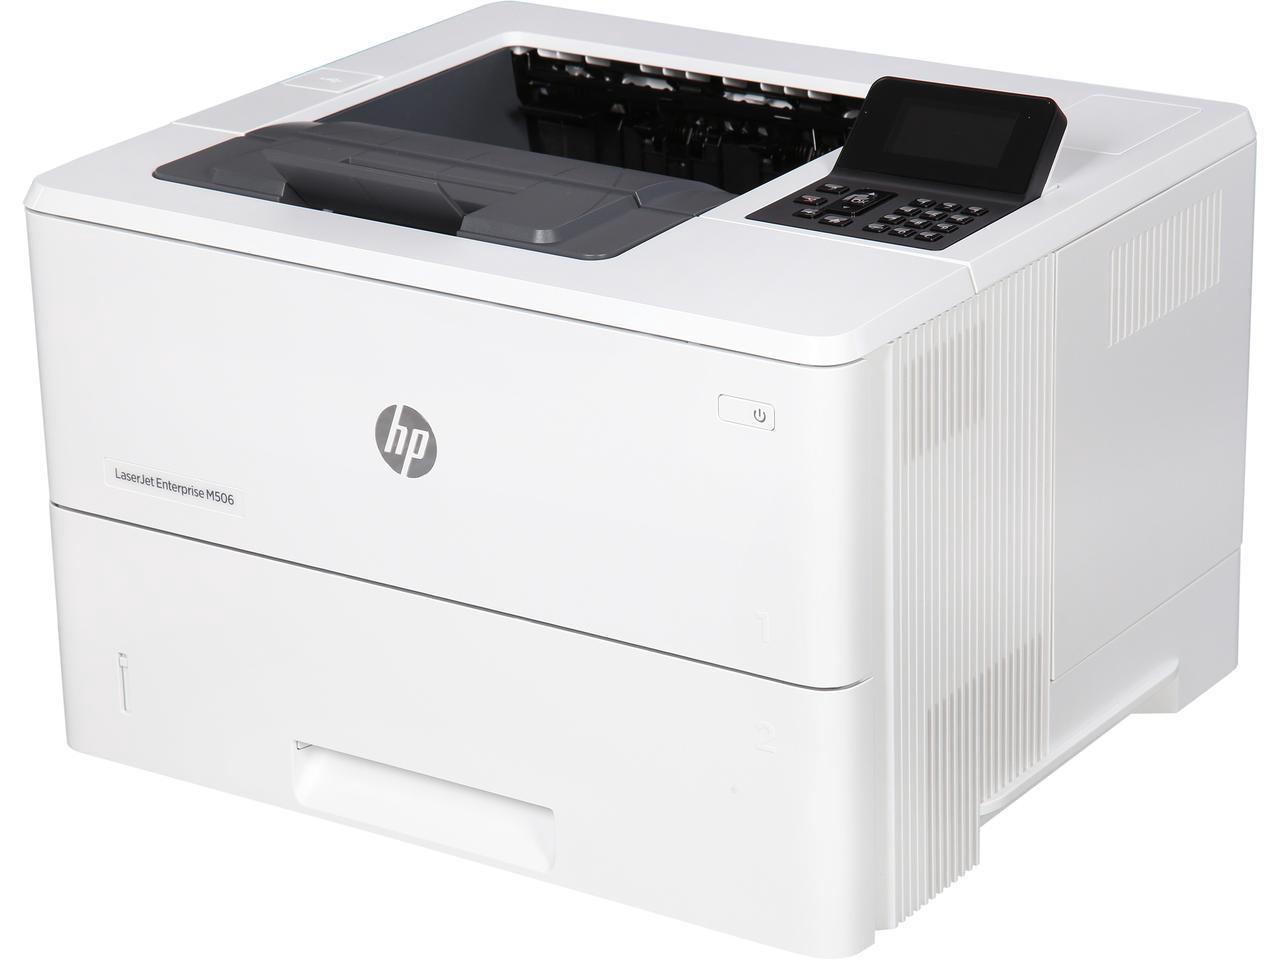 HP LaserJet Enterprise M506dn Office Black and White Laser Printers (F2A69A)